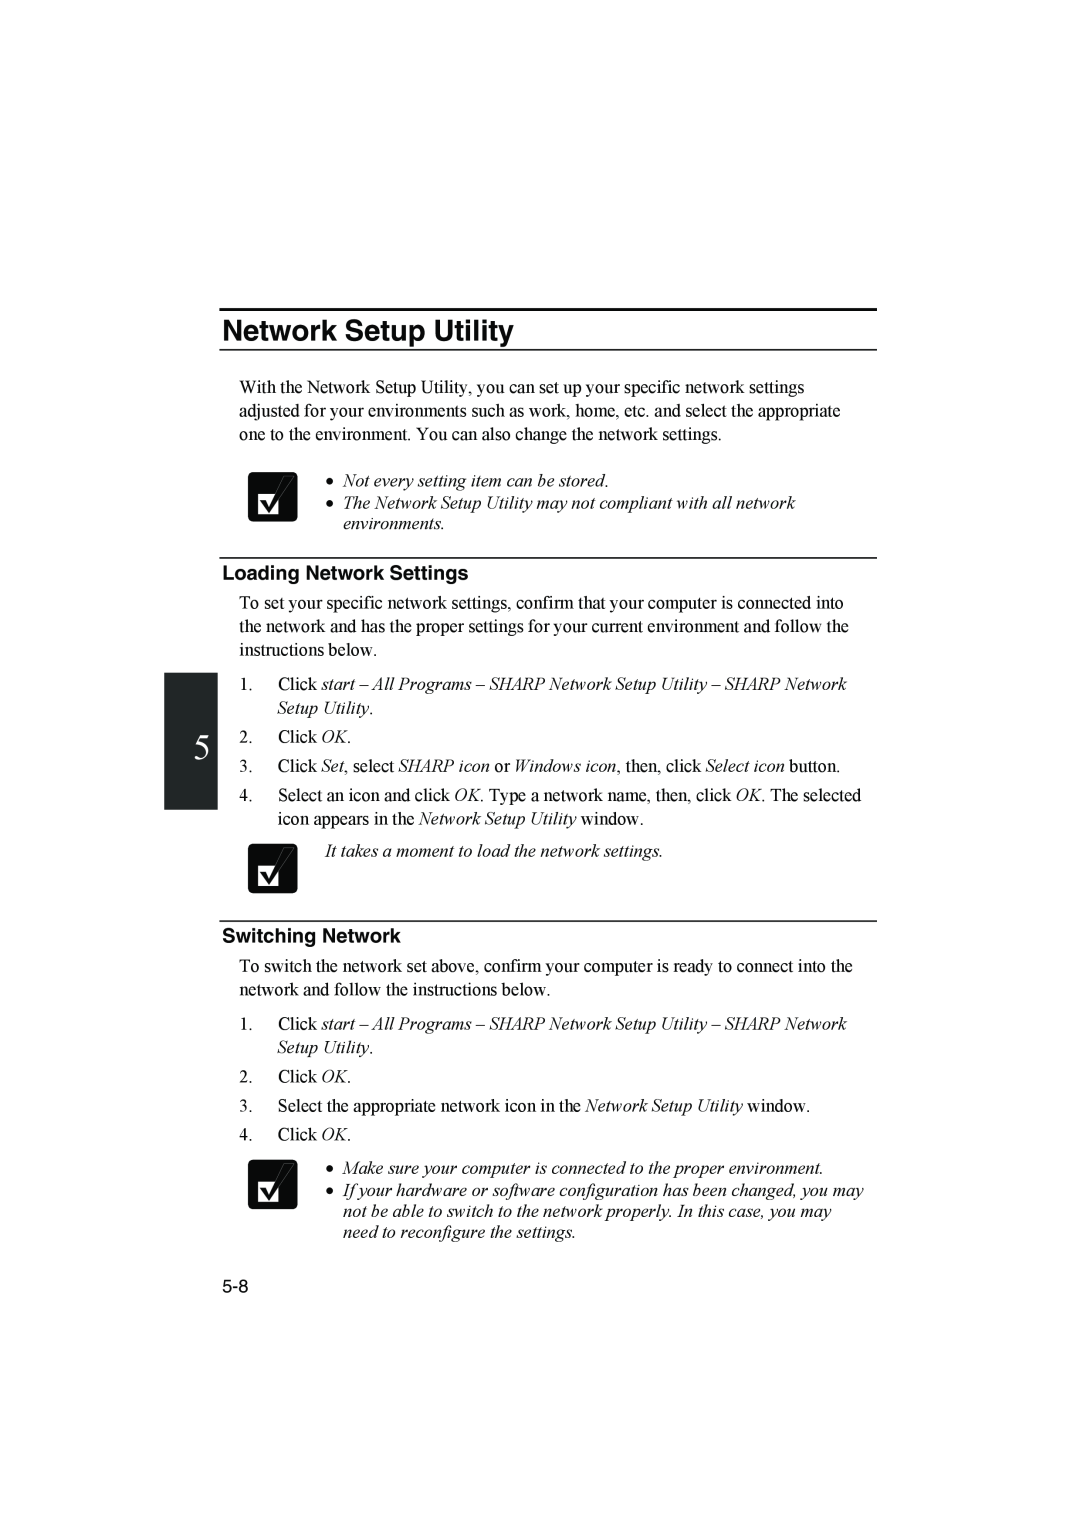 Sharp PC-MM1 manual Network Setup Utility, Loading Network Settings, Switching Network 